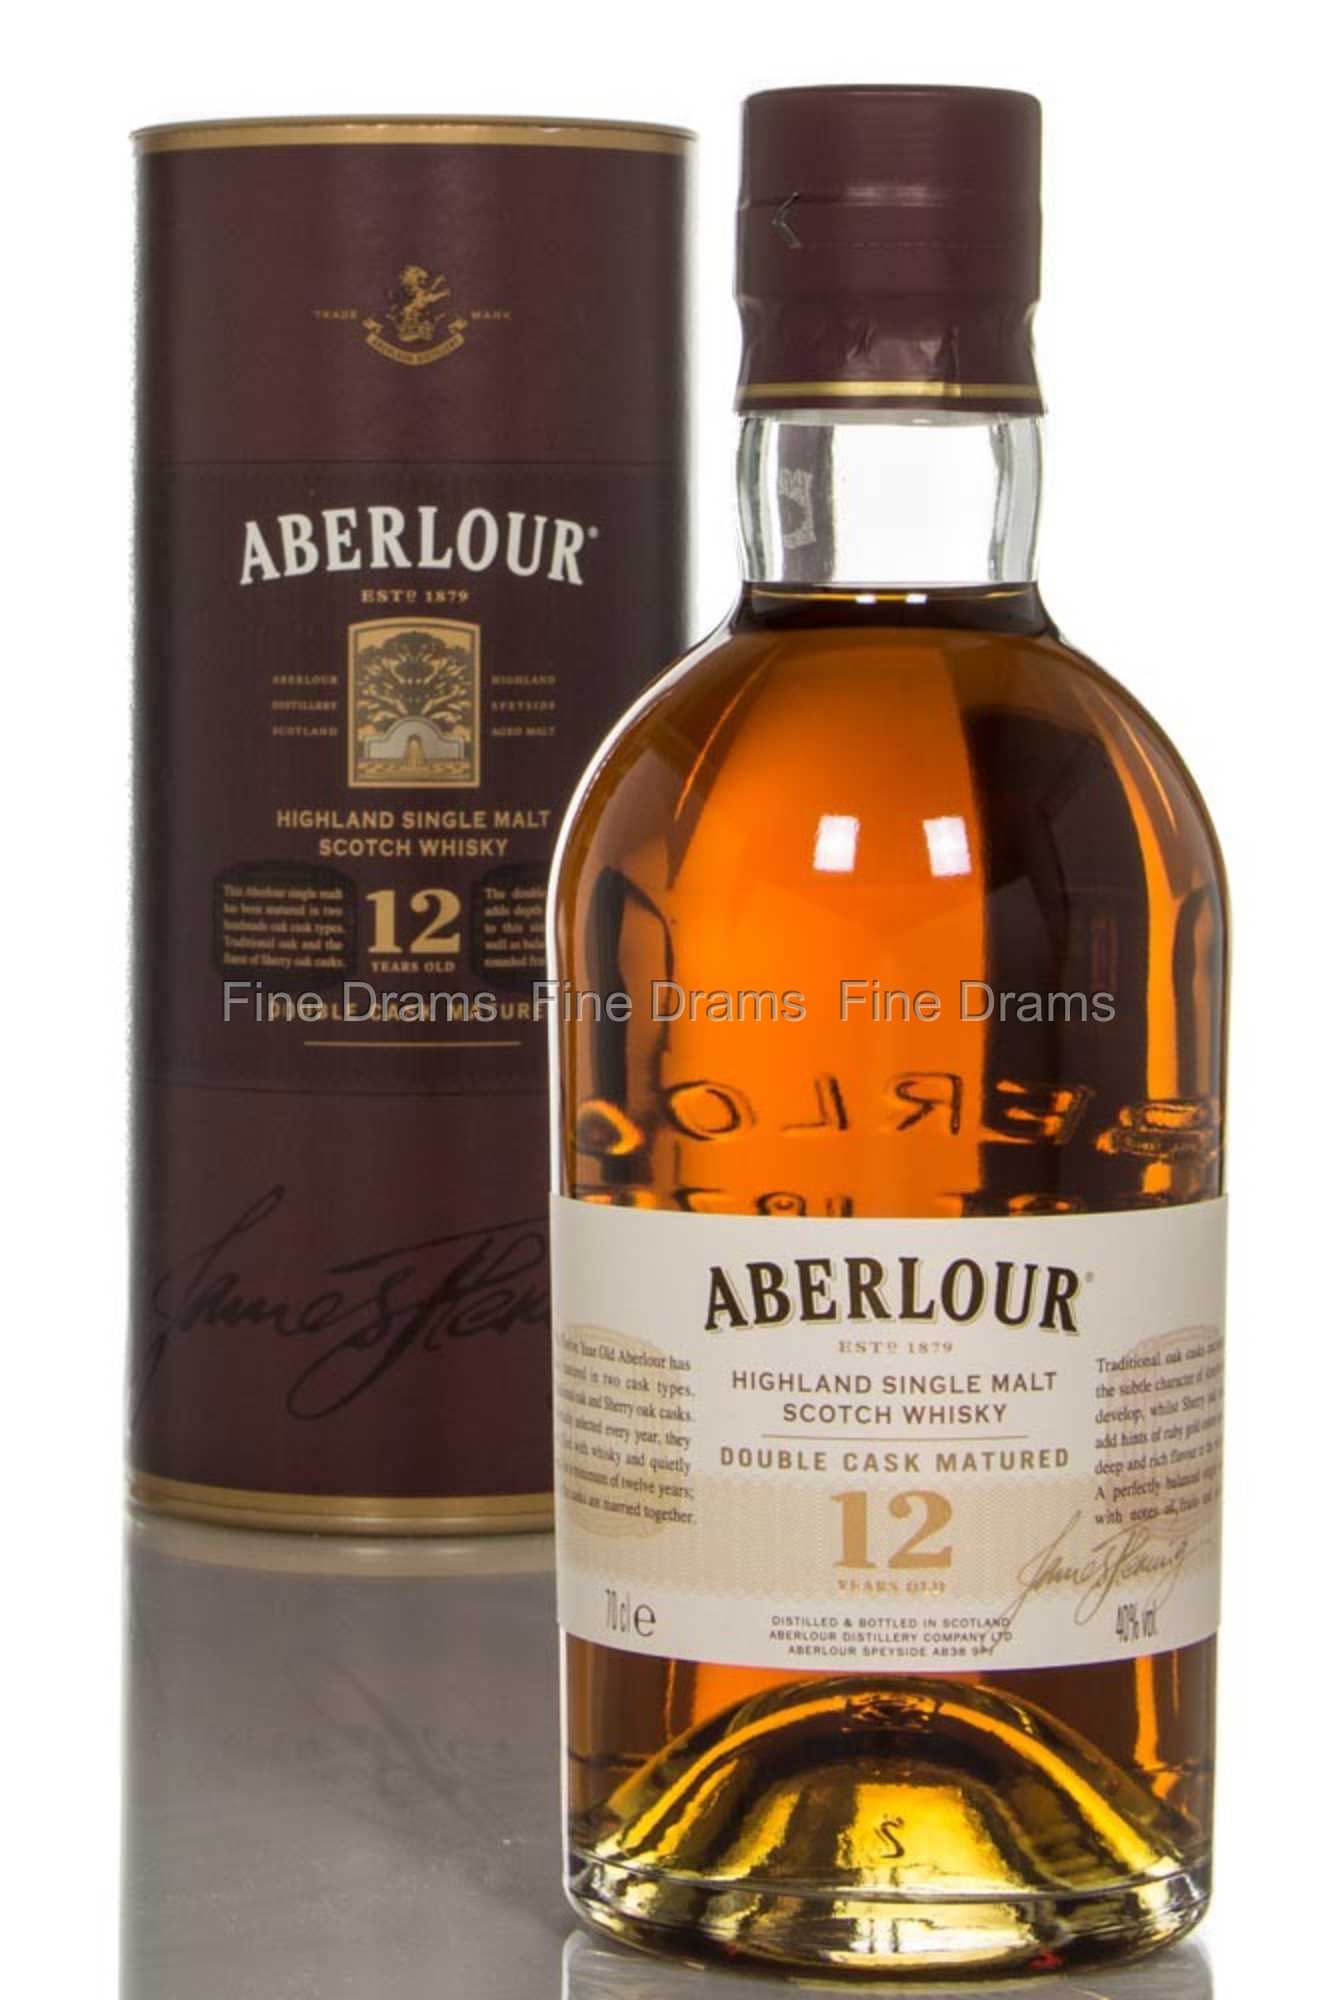 Aberlour 12 Year Double Cask Matured Speyside Single Malt Scotch Whisky